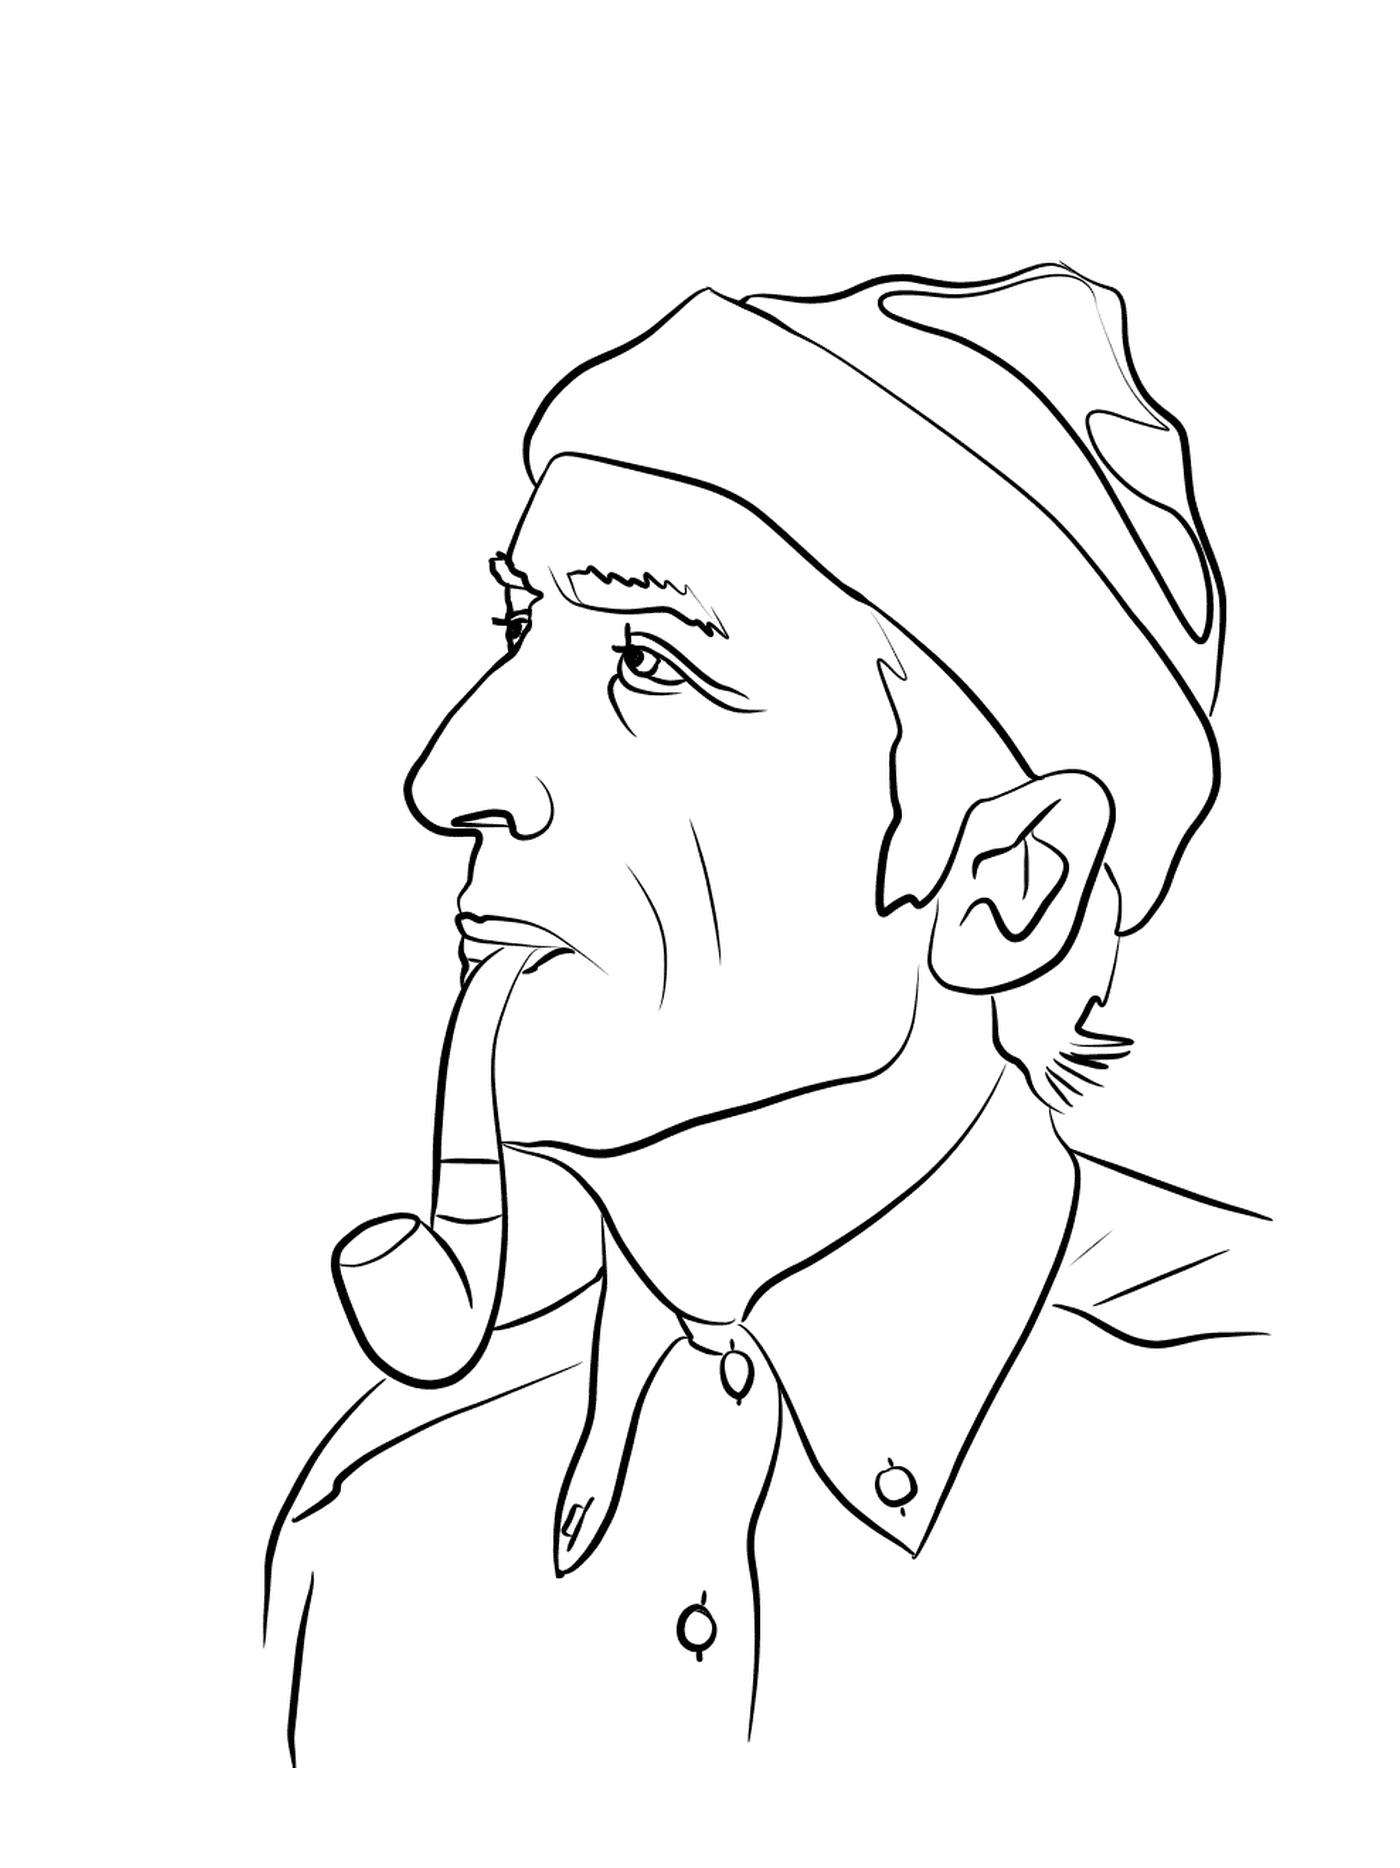  Jacques-Yves Cousteau,著名探险家 